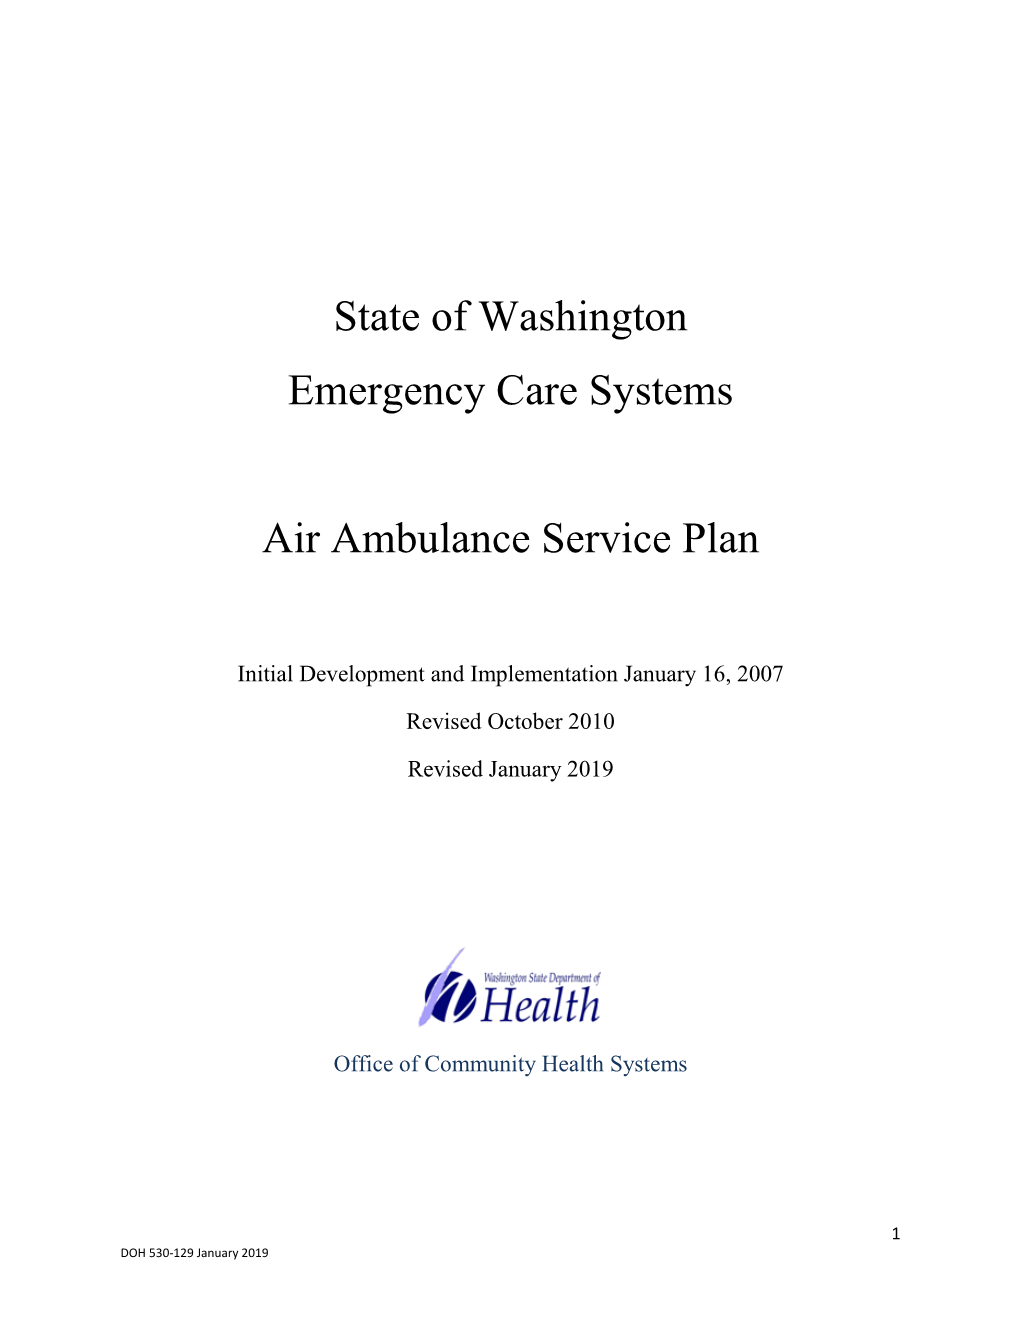 Air Ambulance Service Plan